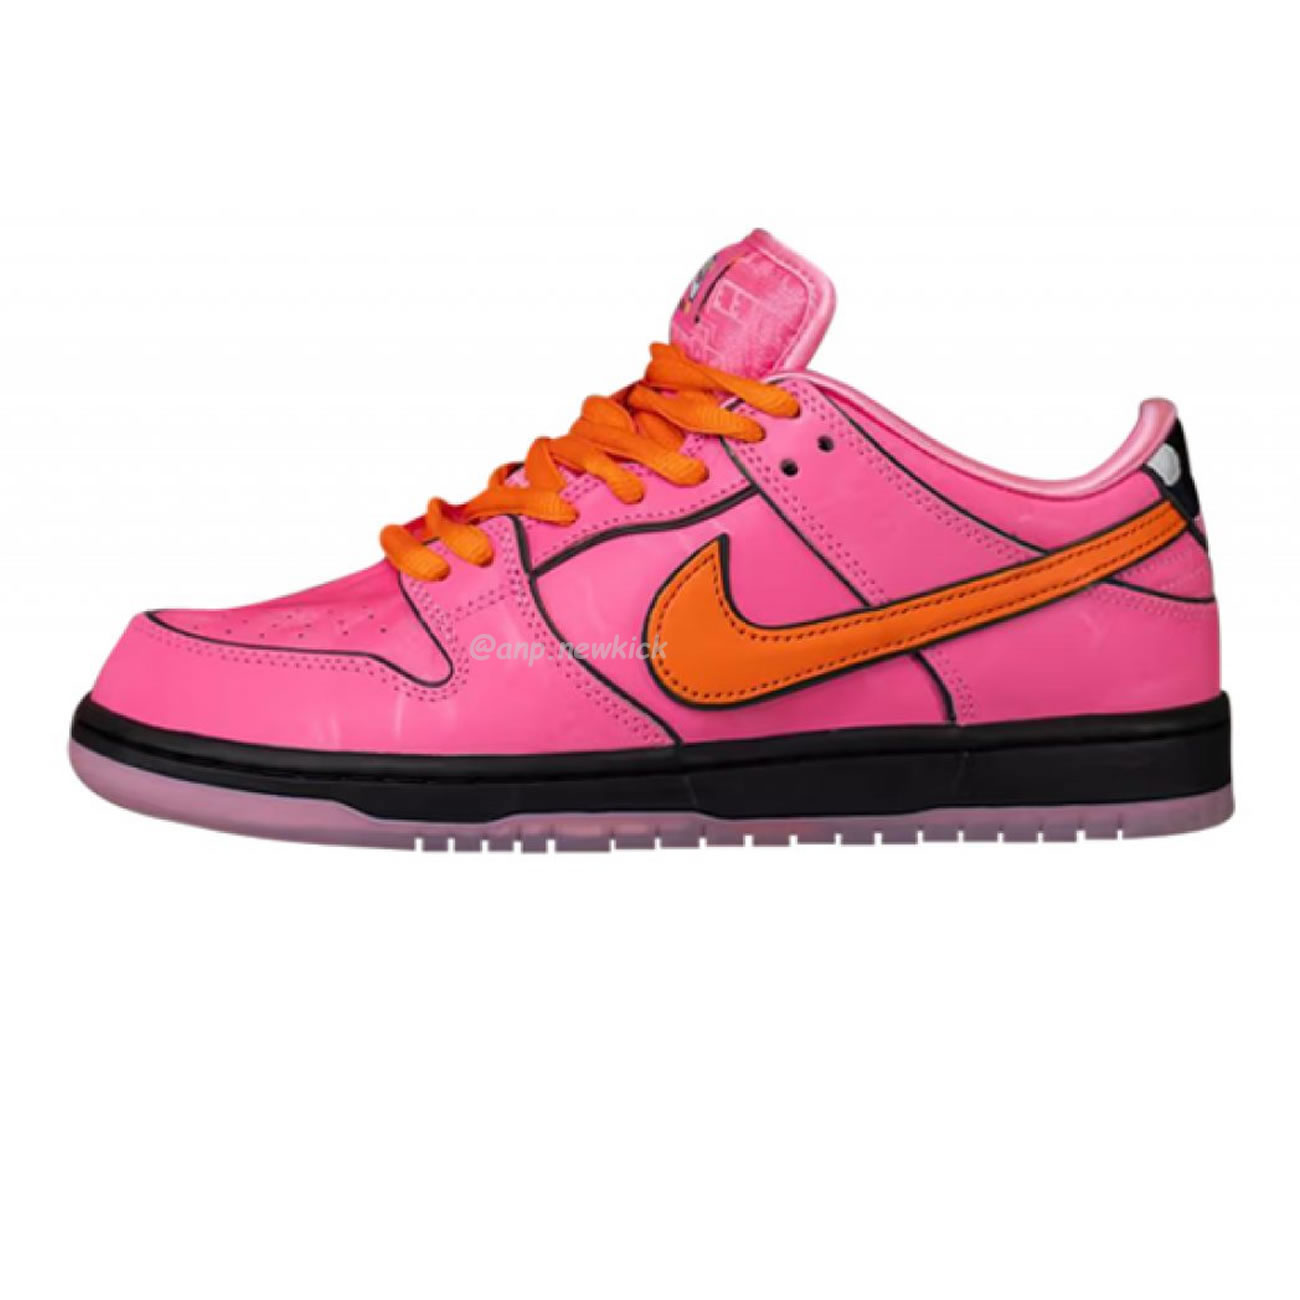 Nike SB Dunk Low x 'The Powerpuff Girls' On-Feet Look at "Bubbles" FZ8320-400 "Blossom" FD2631-600 “Buttercup” FZ8319-300